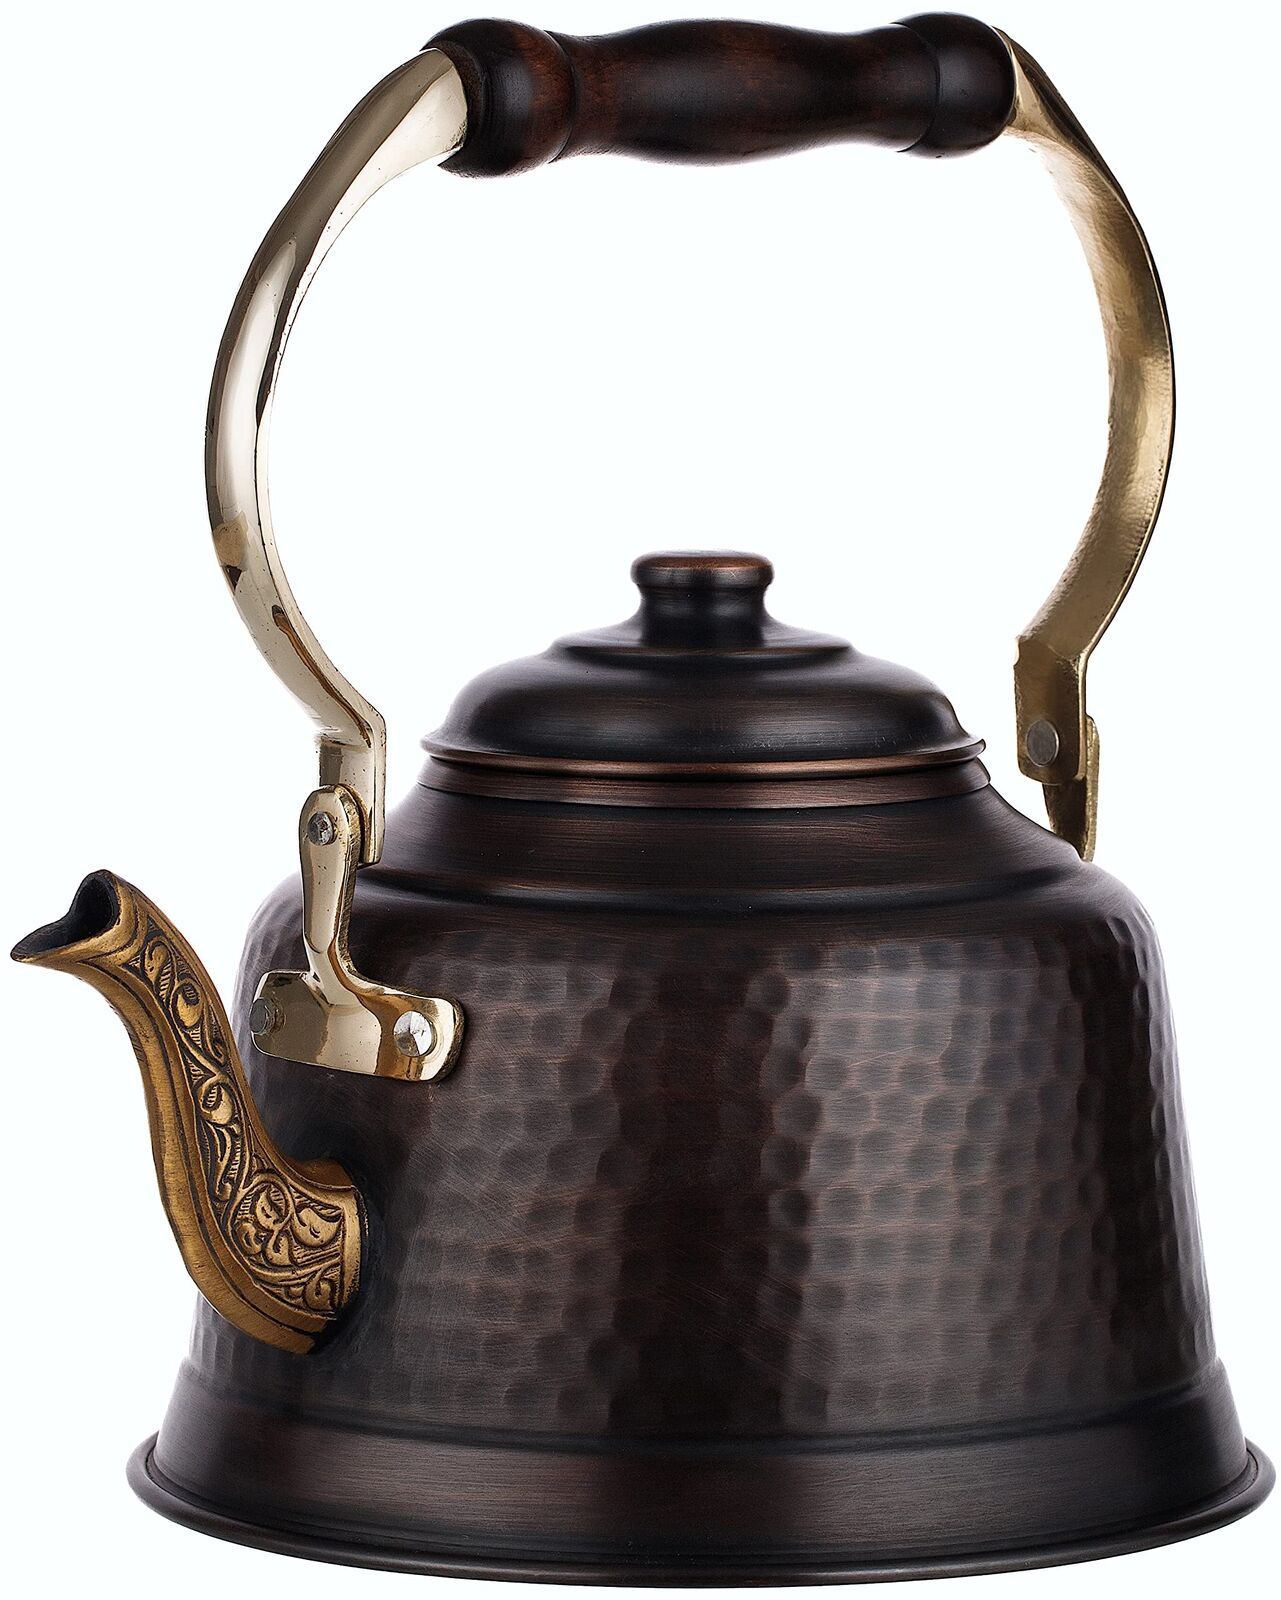 DEMMEX Heavy Gauge 1mm Thick Hammered Copper Tea Pot Kettle Stovetop Teapot A...